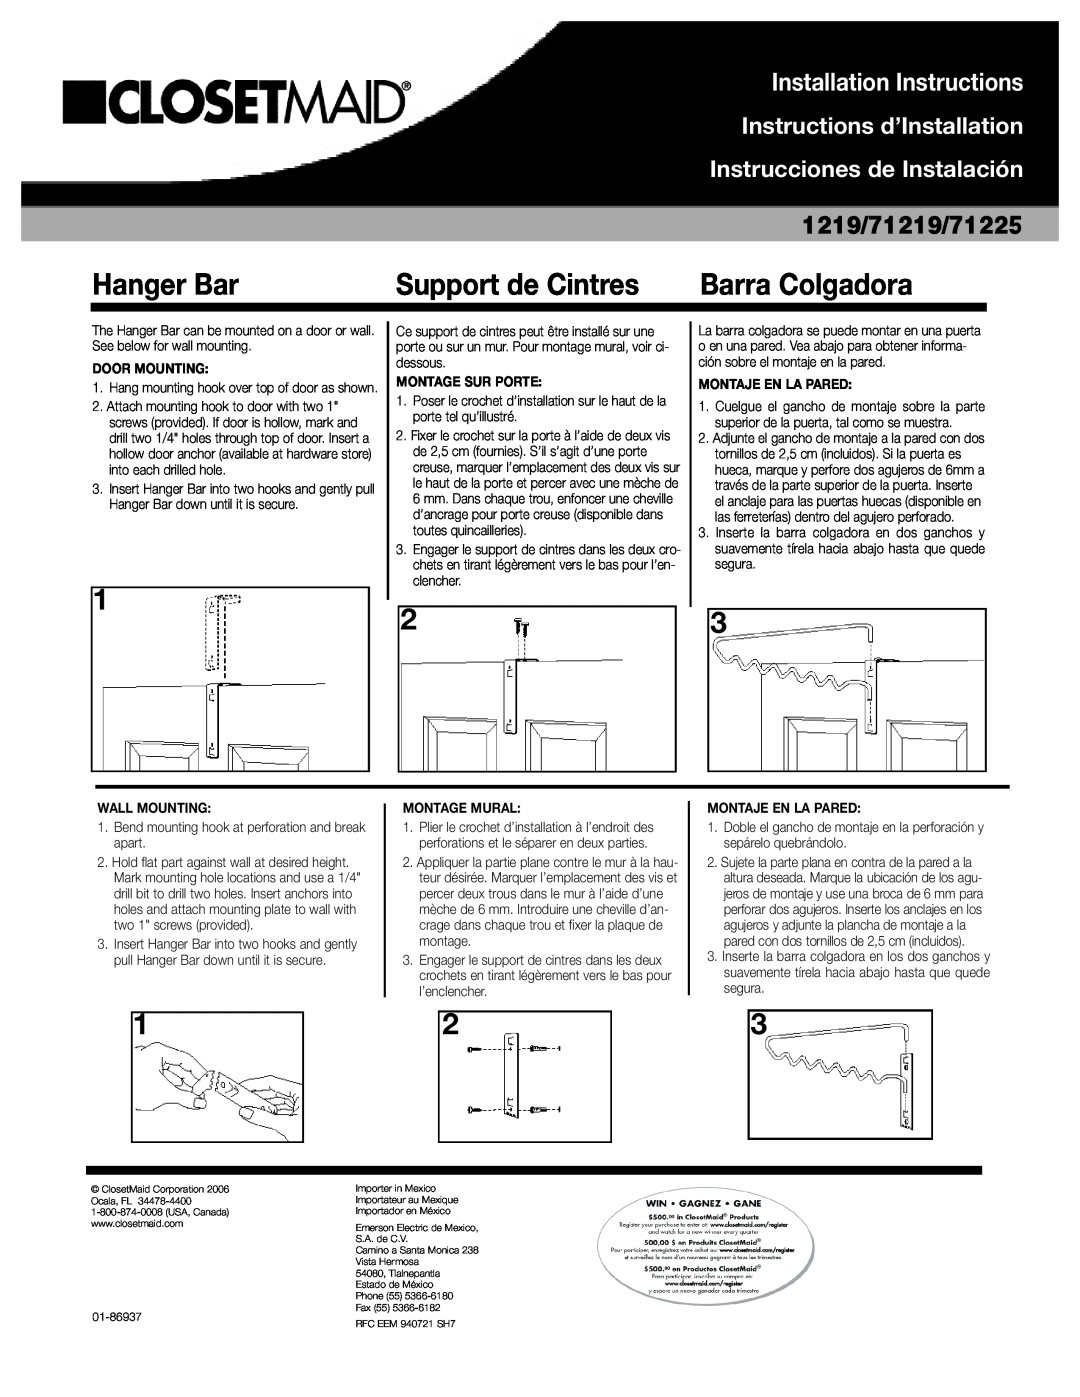 Closet Maid 71219 installation instructions Hanger Bar, Support de Cintres, Barra Colgadora, Installation Instructions 